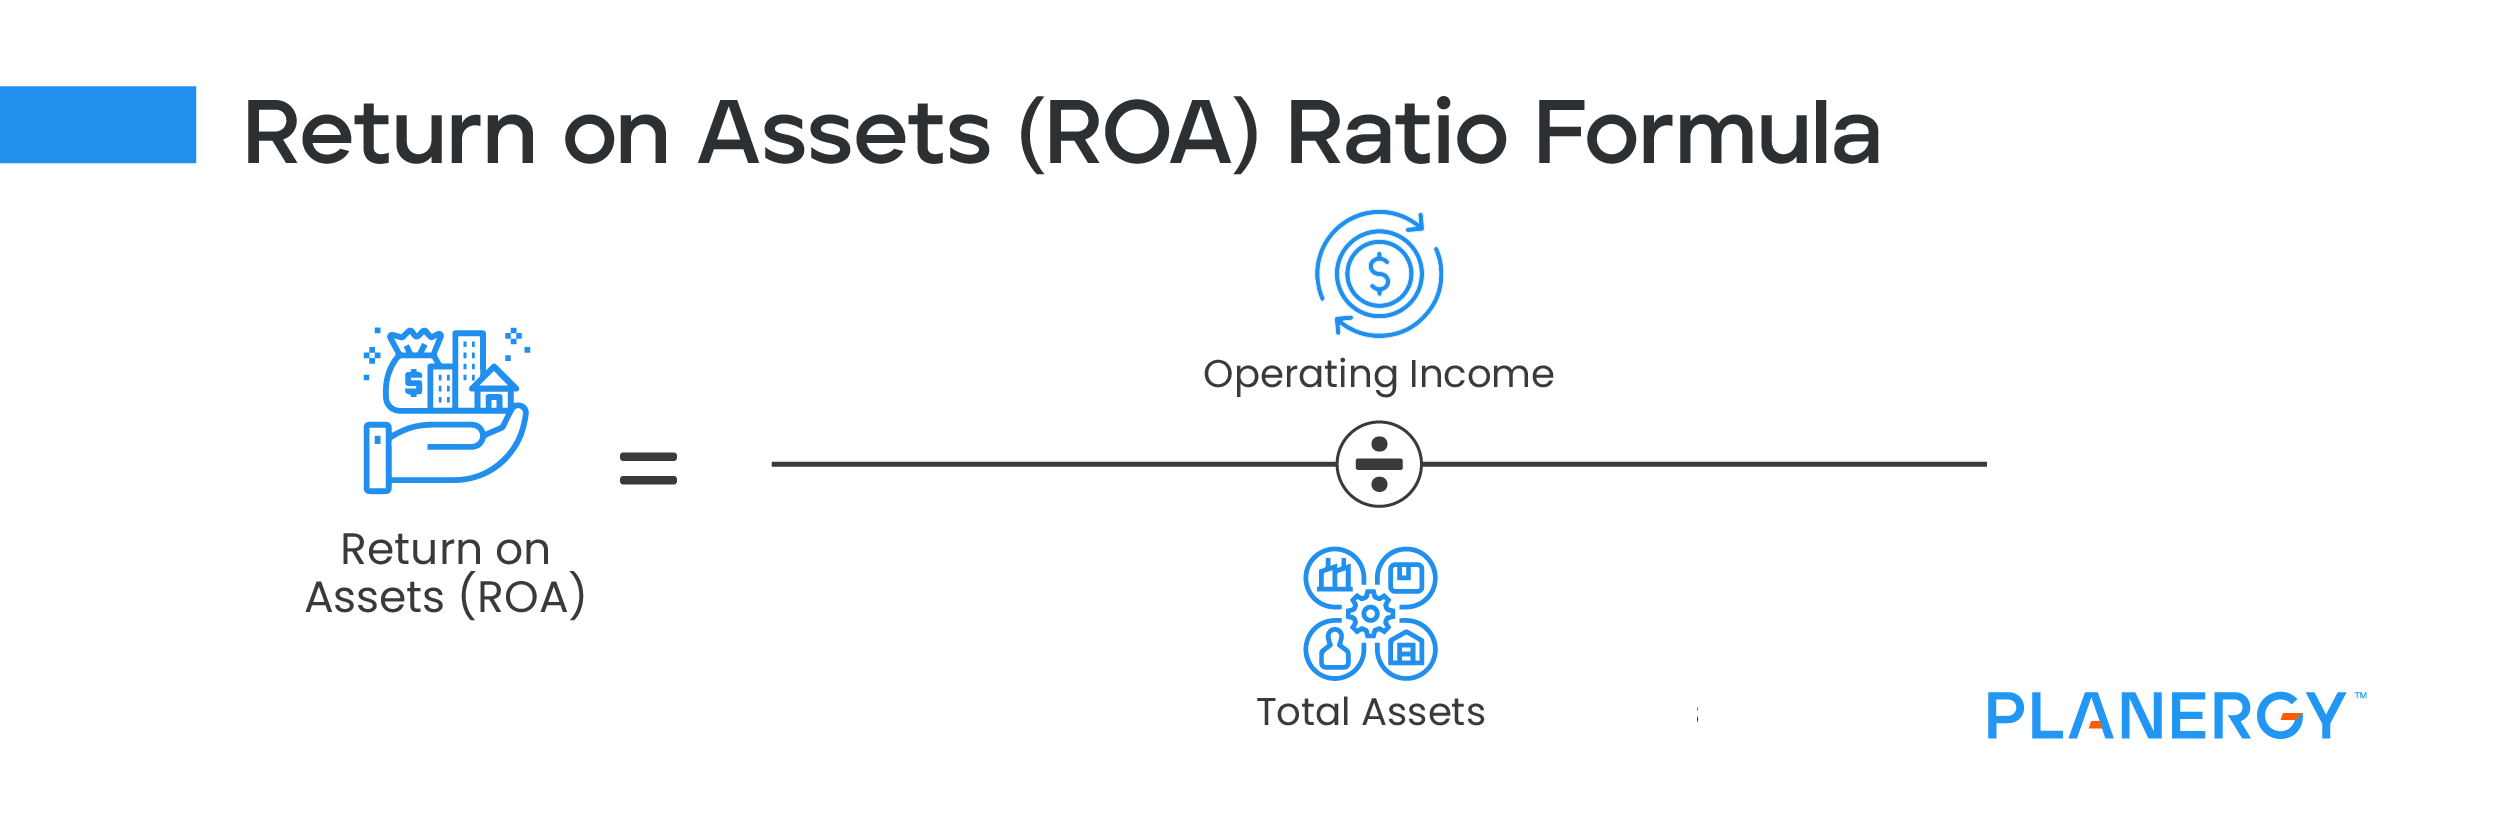 Return on Assets Ratio Formula